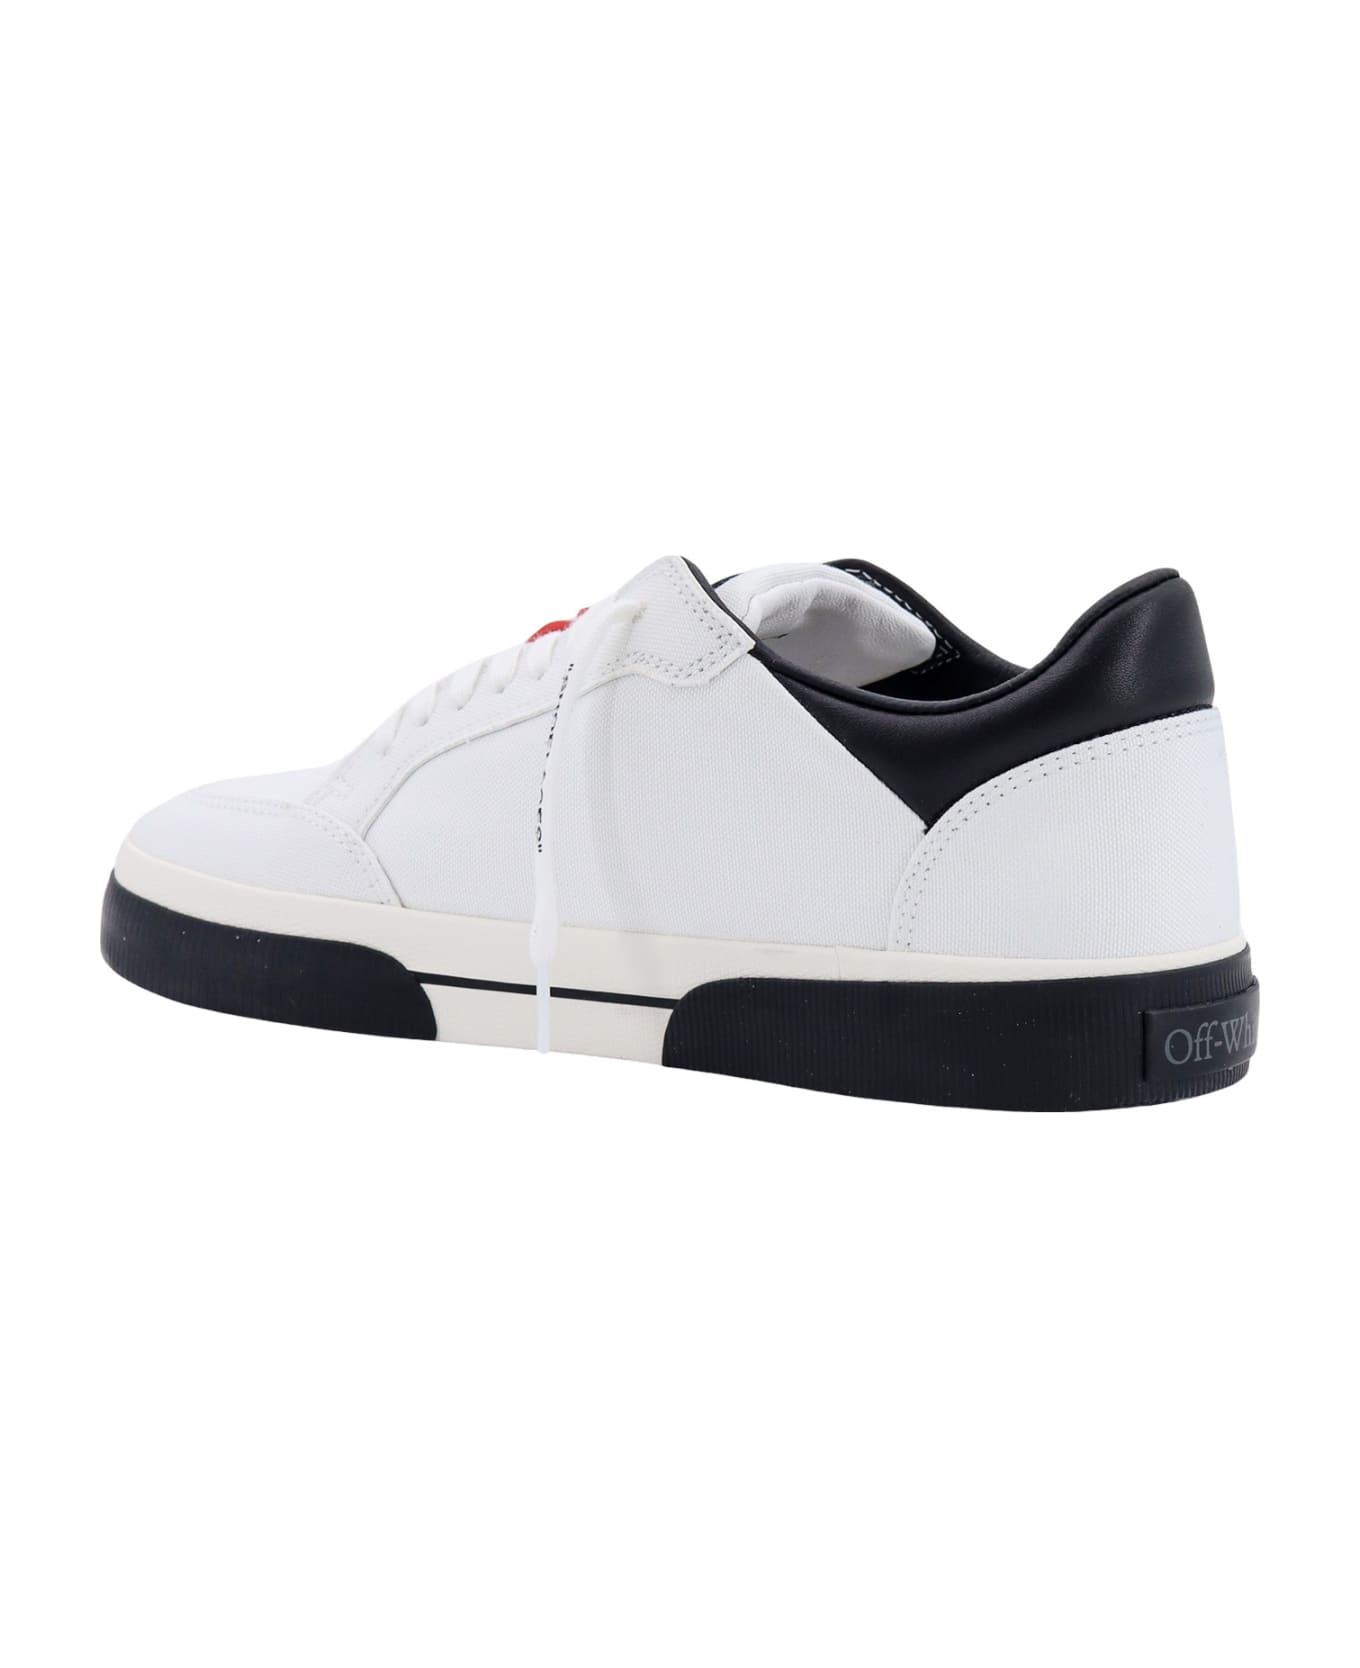 Off-White New Low Vulcanized Sneakers - WHITE BLACK (Black)